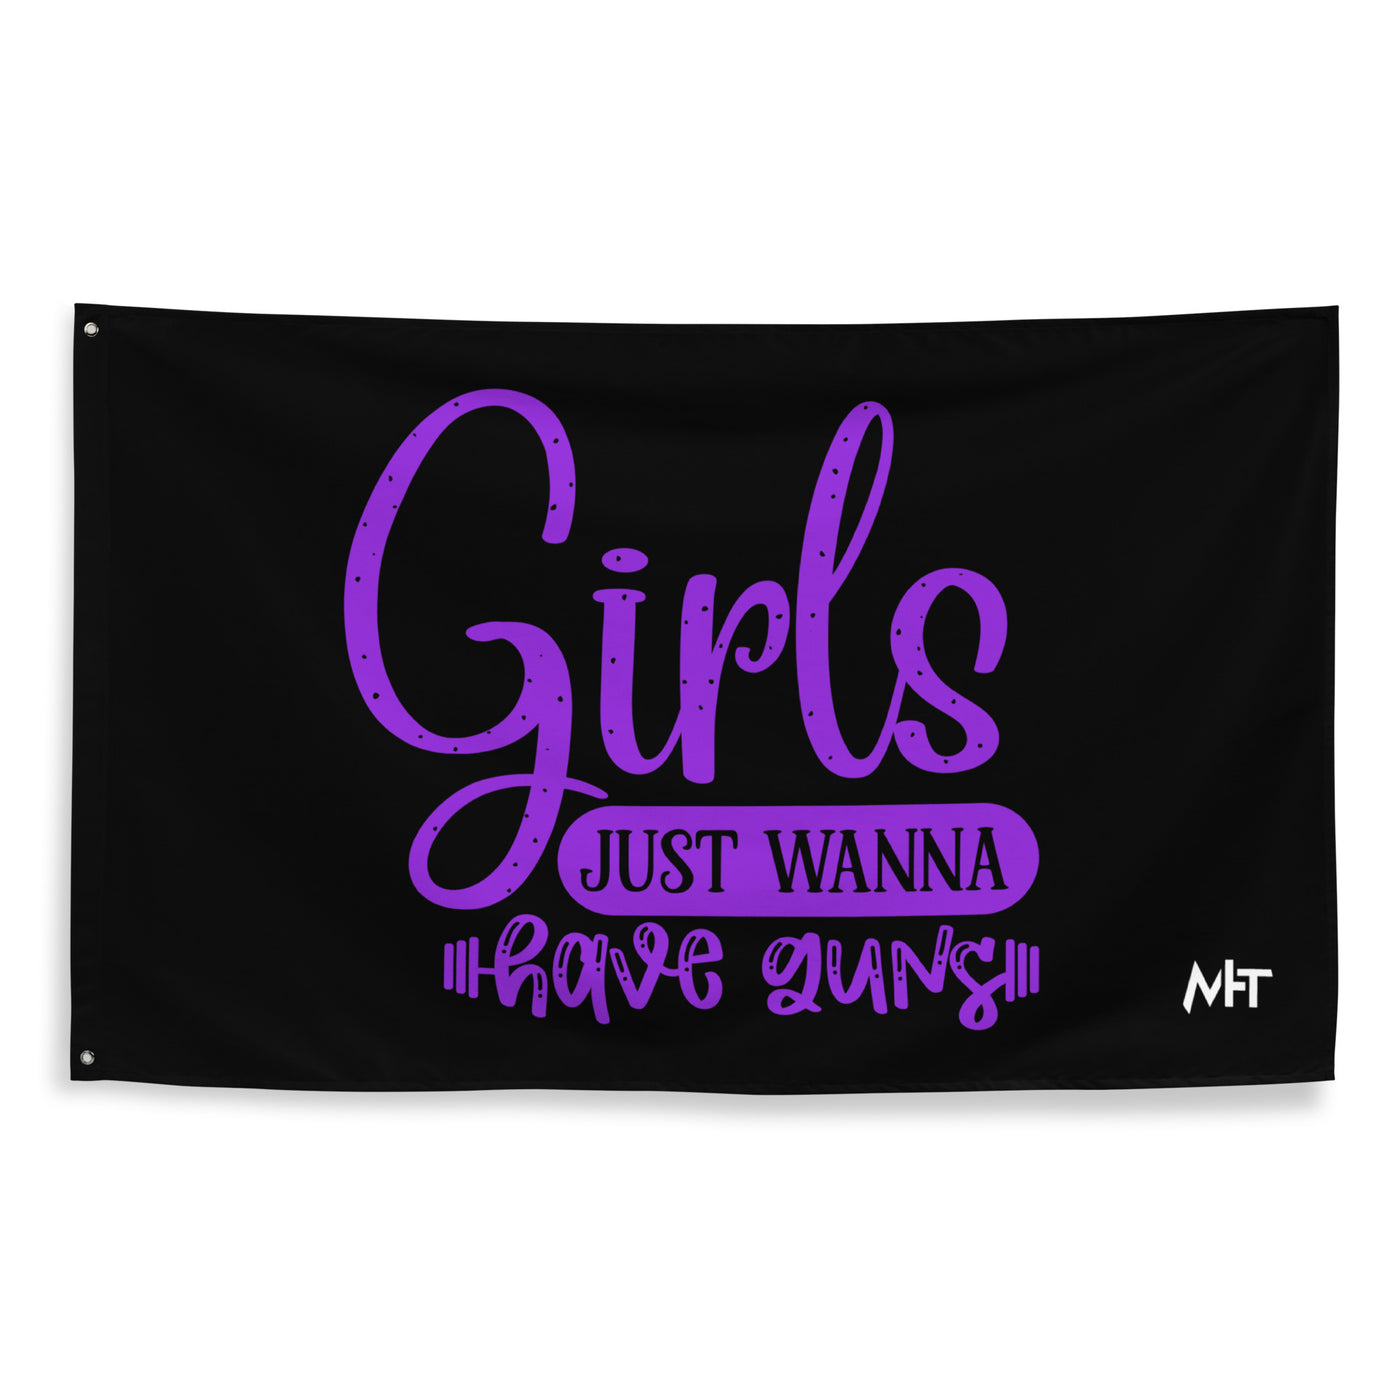 Girls just wanna have guns - Flag